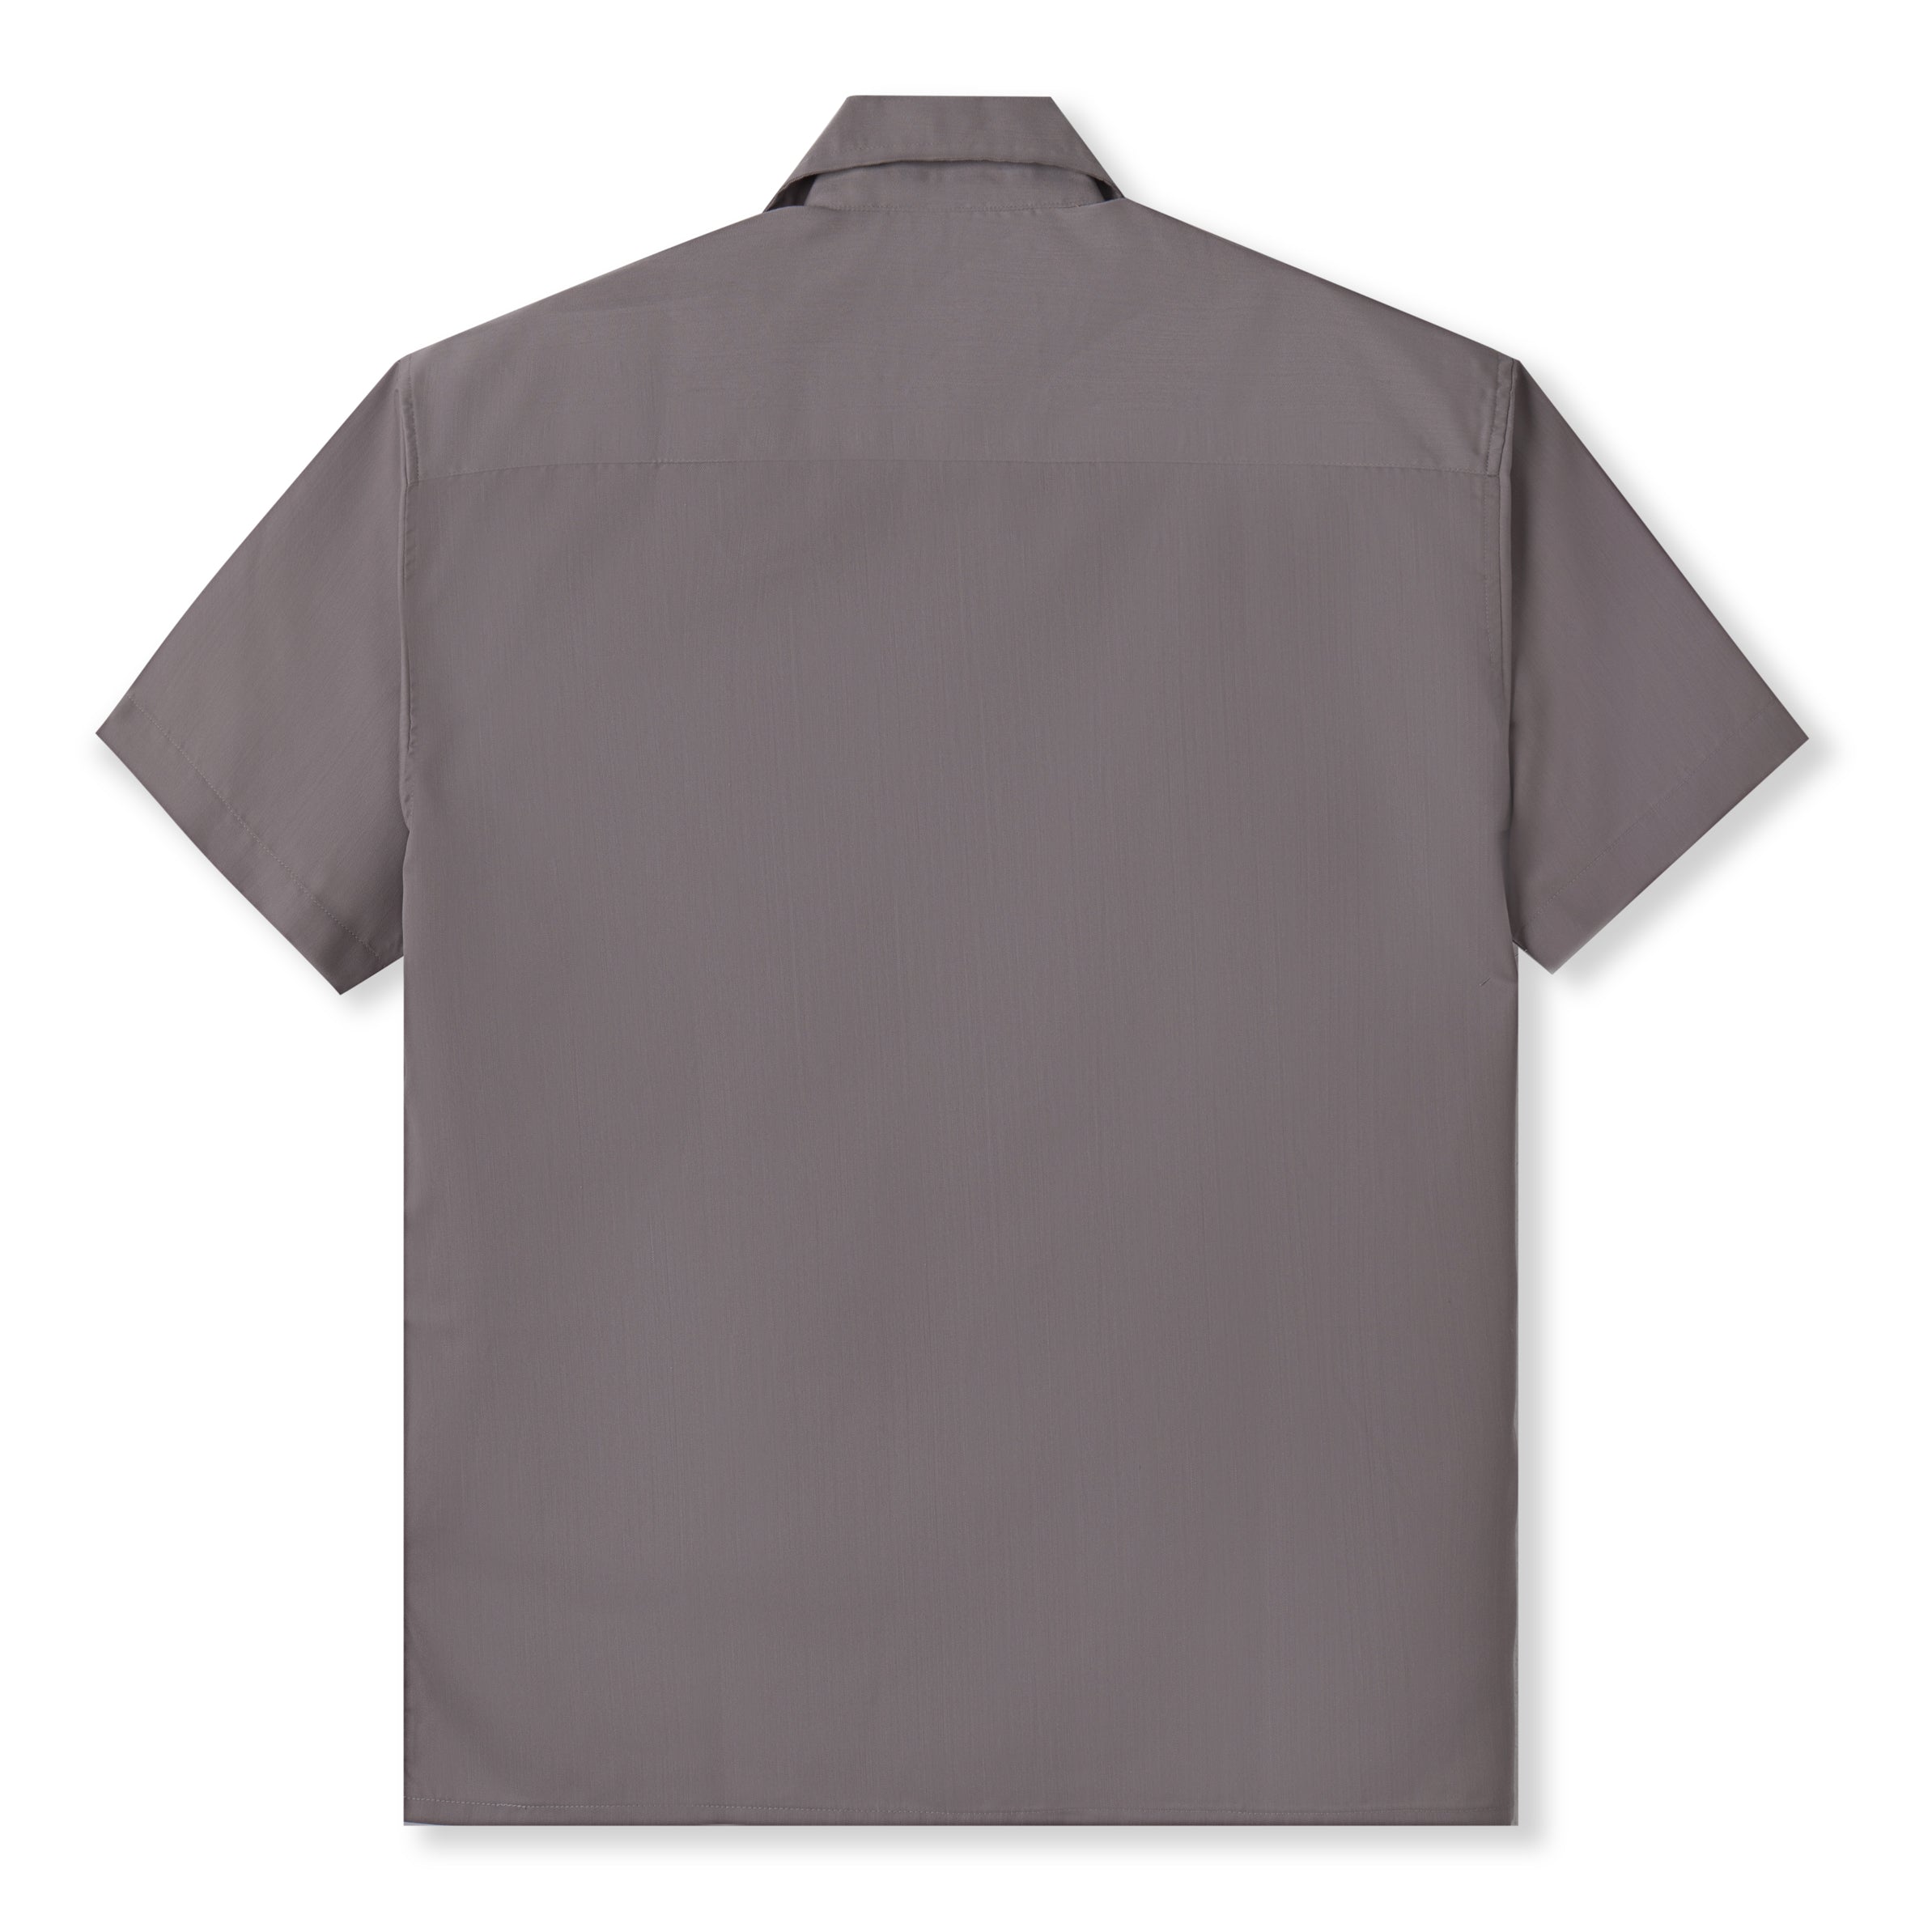 The Prep Shirt - Grey